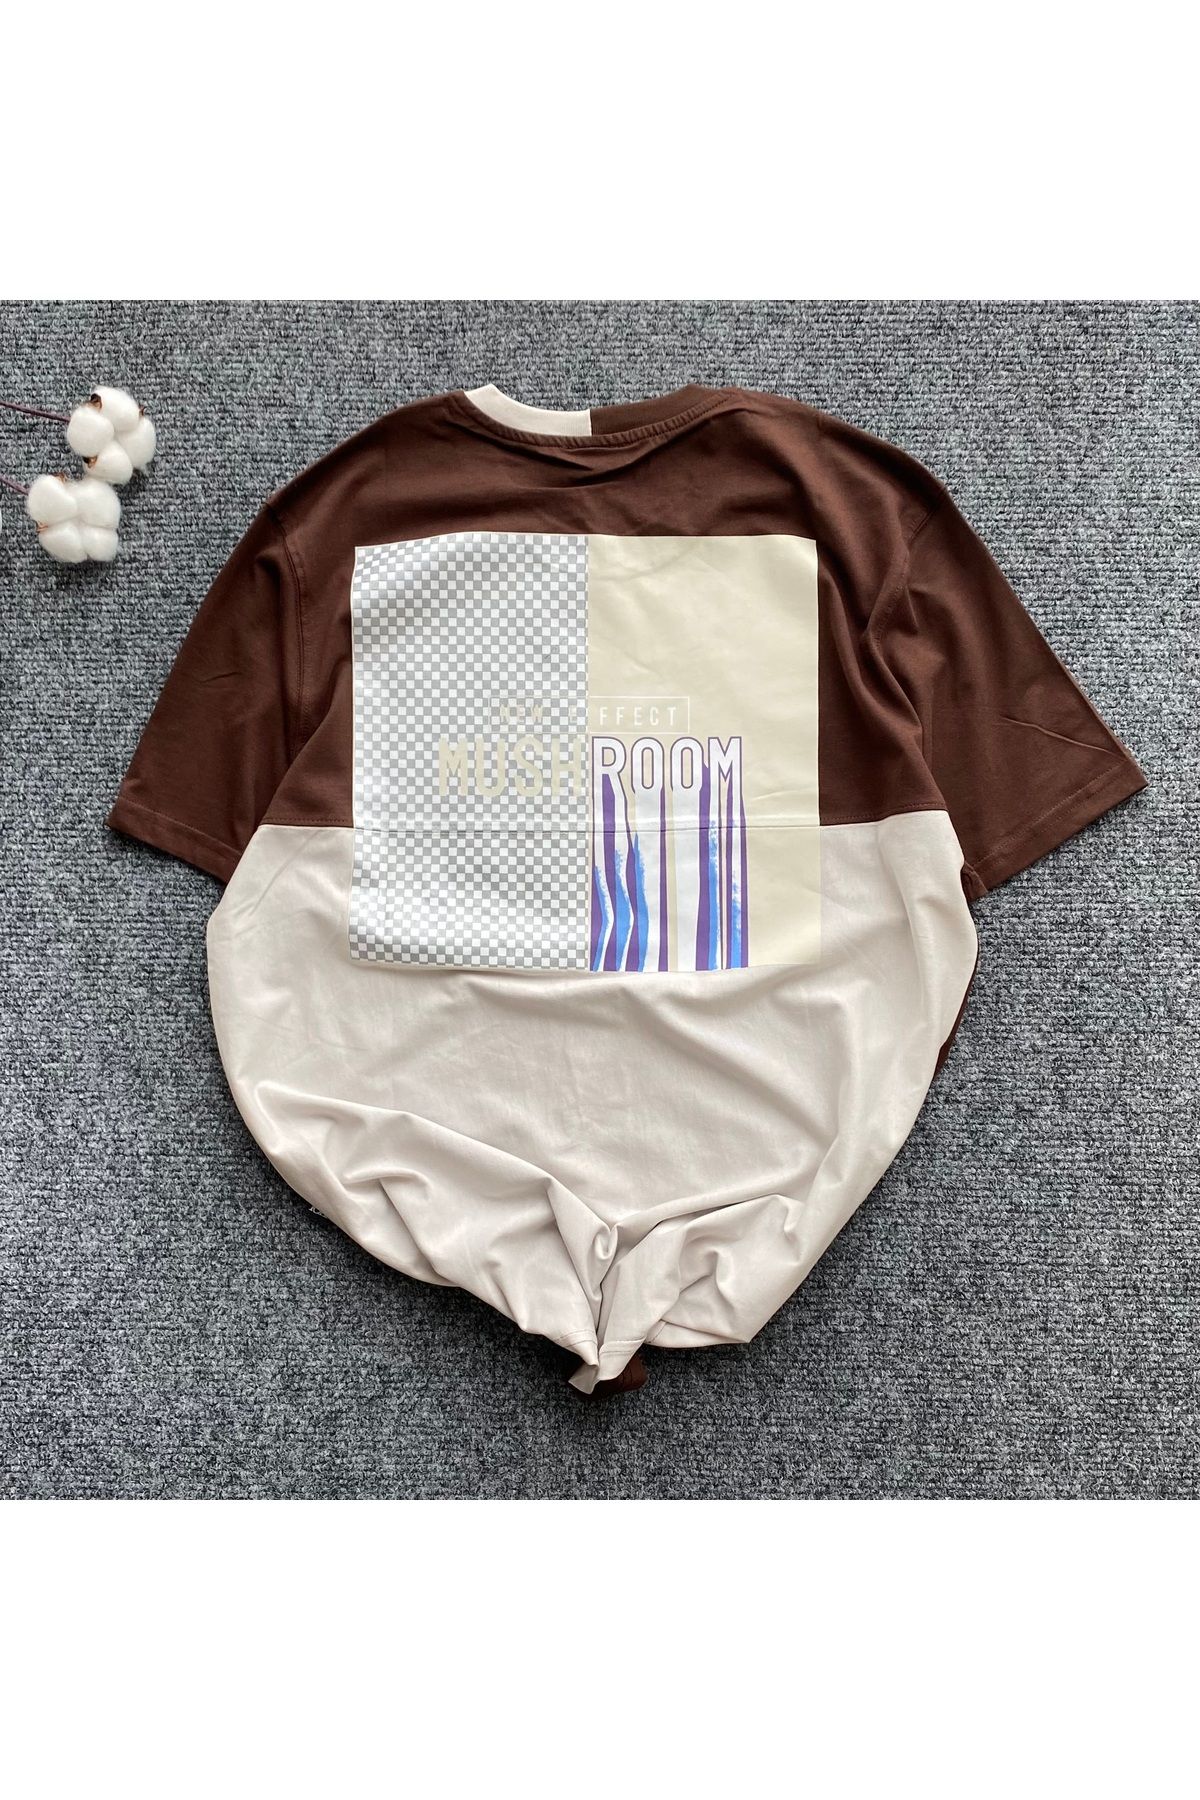 Retro Çift baskılı çift renk slimfit tshirt